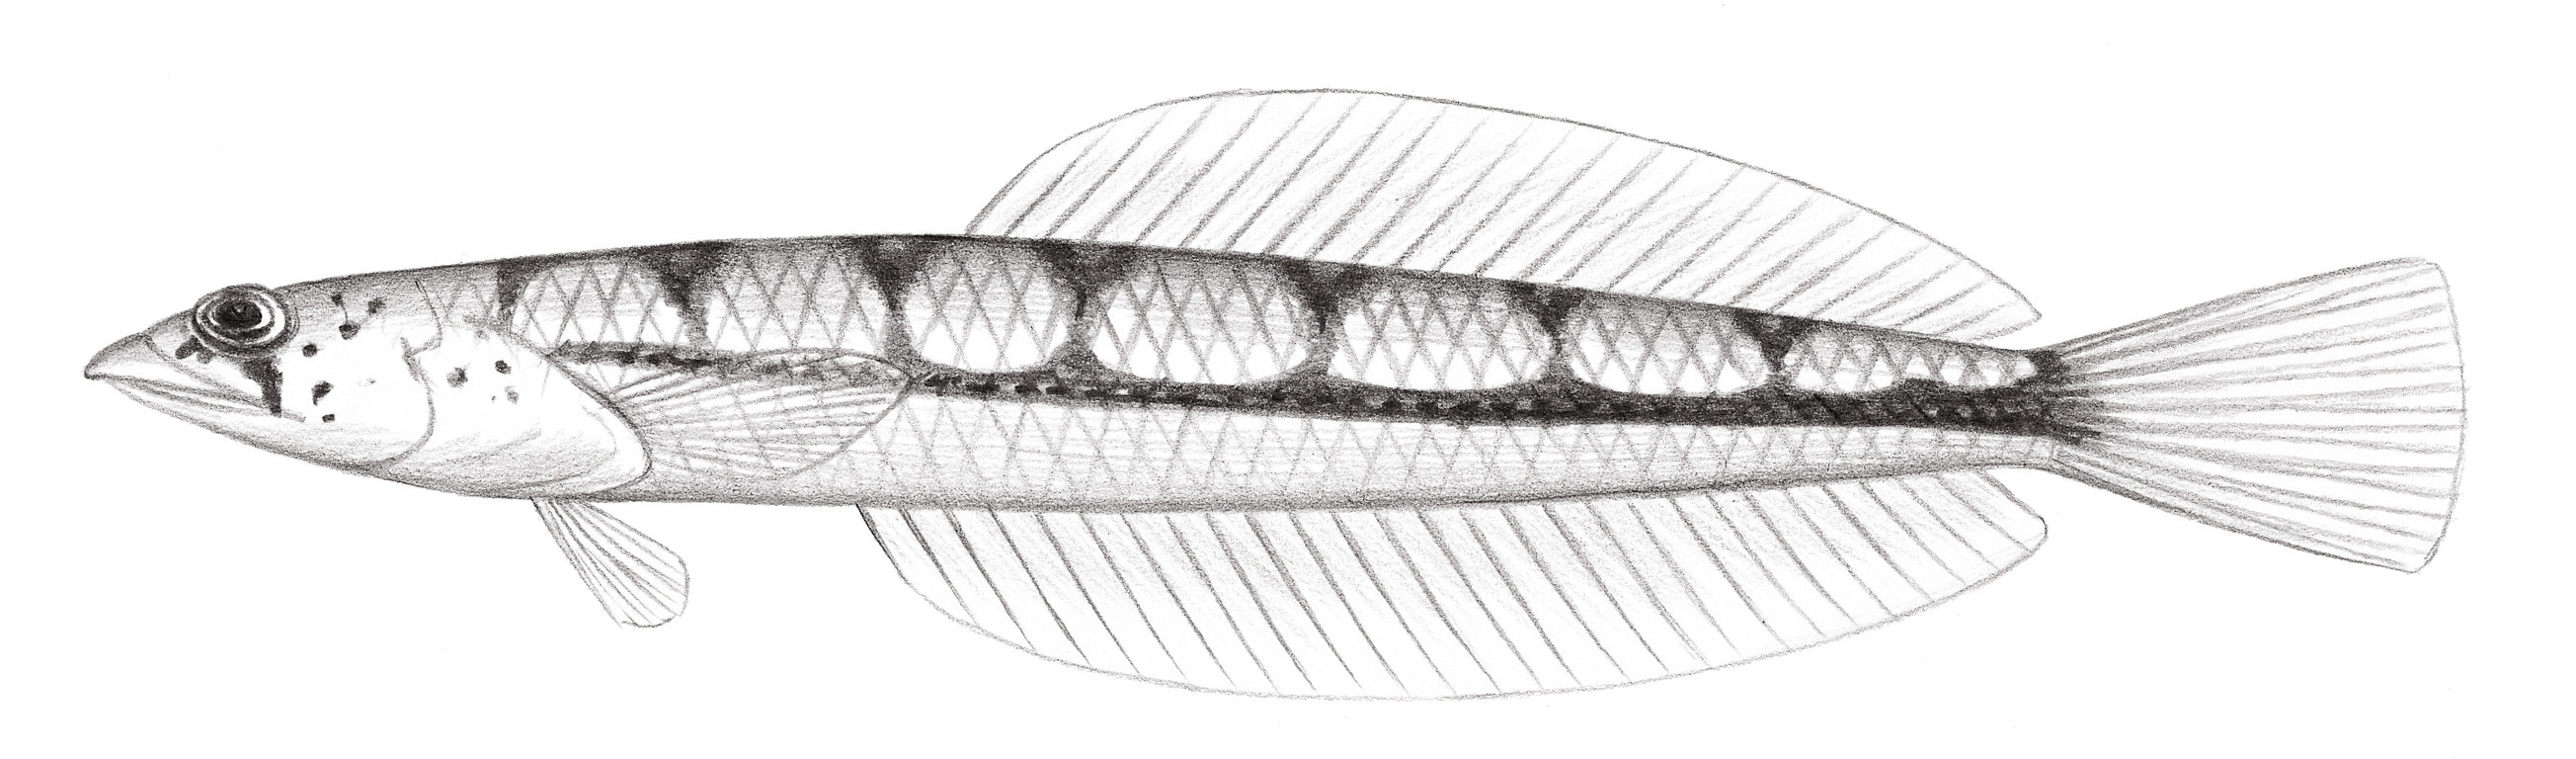 1906.	縱帶沙鱚 Limnichthy fasciatus Waite, 1904